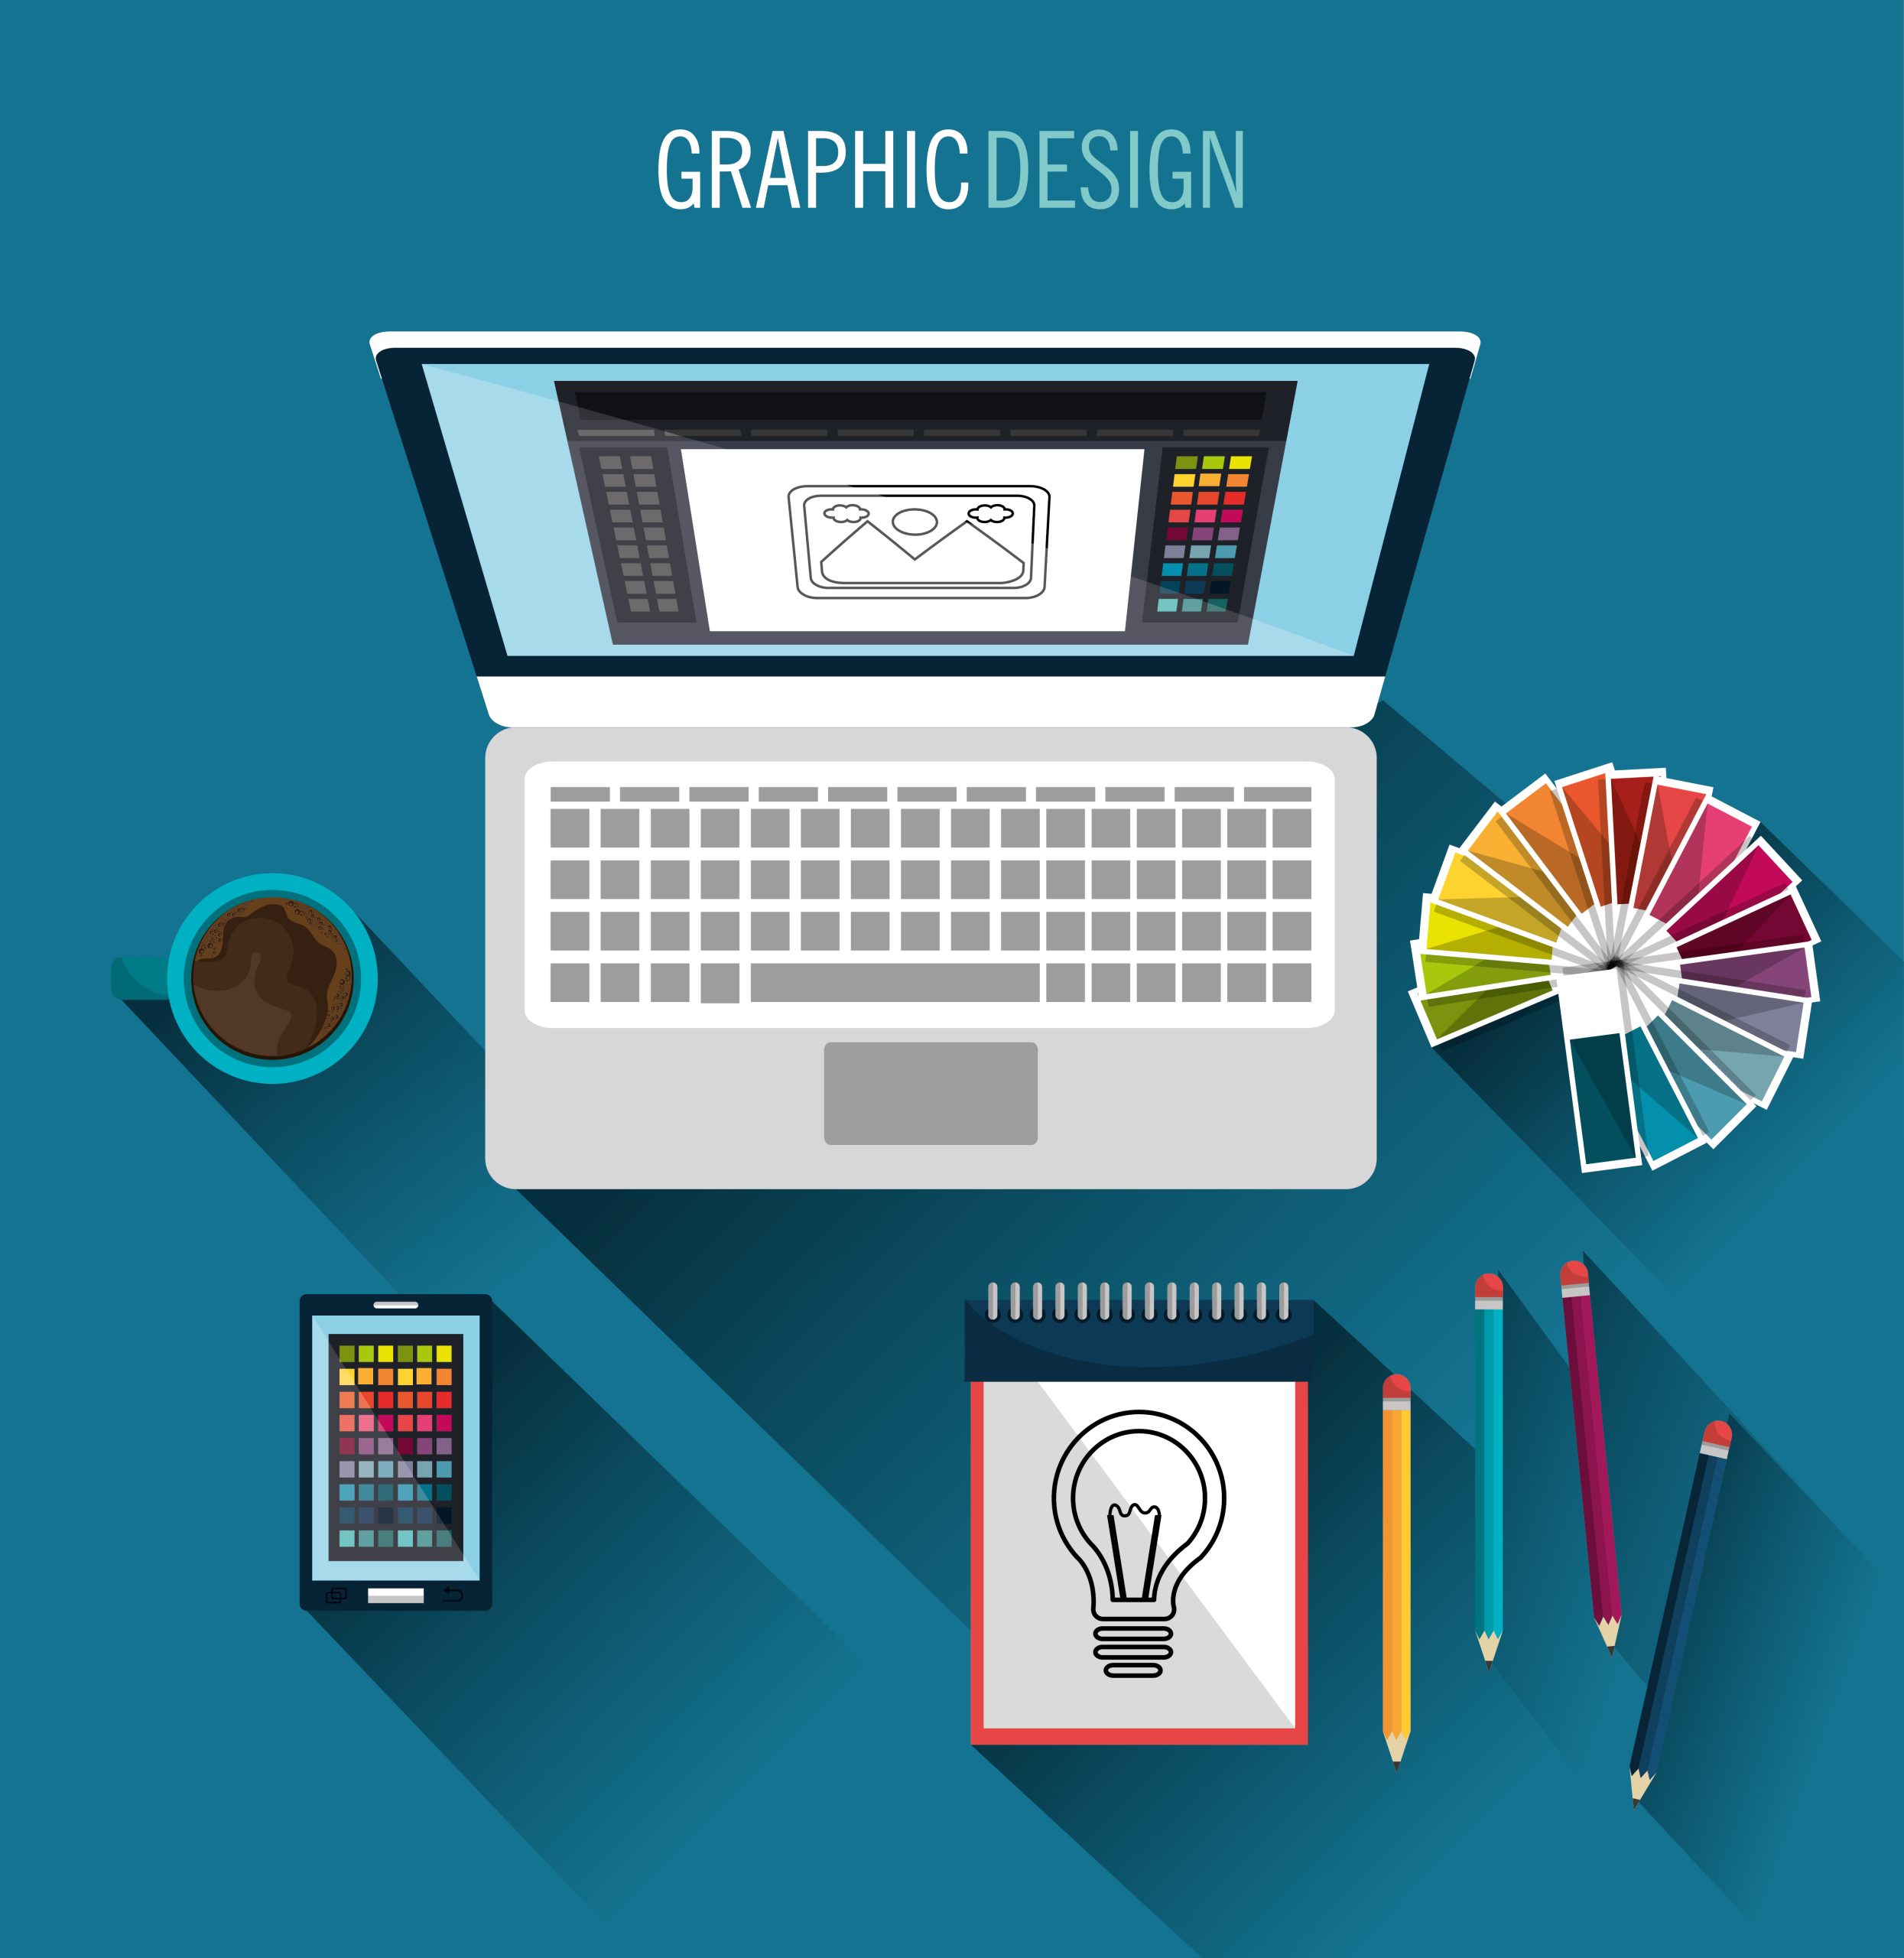 Graphic design art and profession theme, vector illustration eps 10